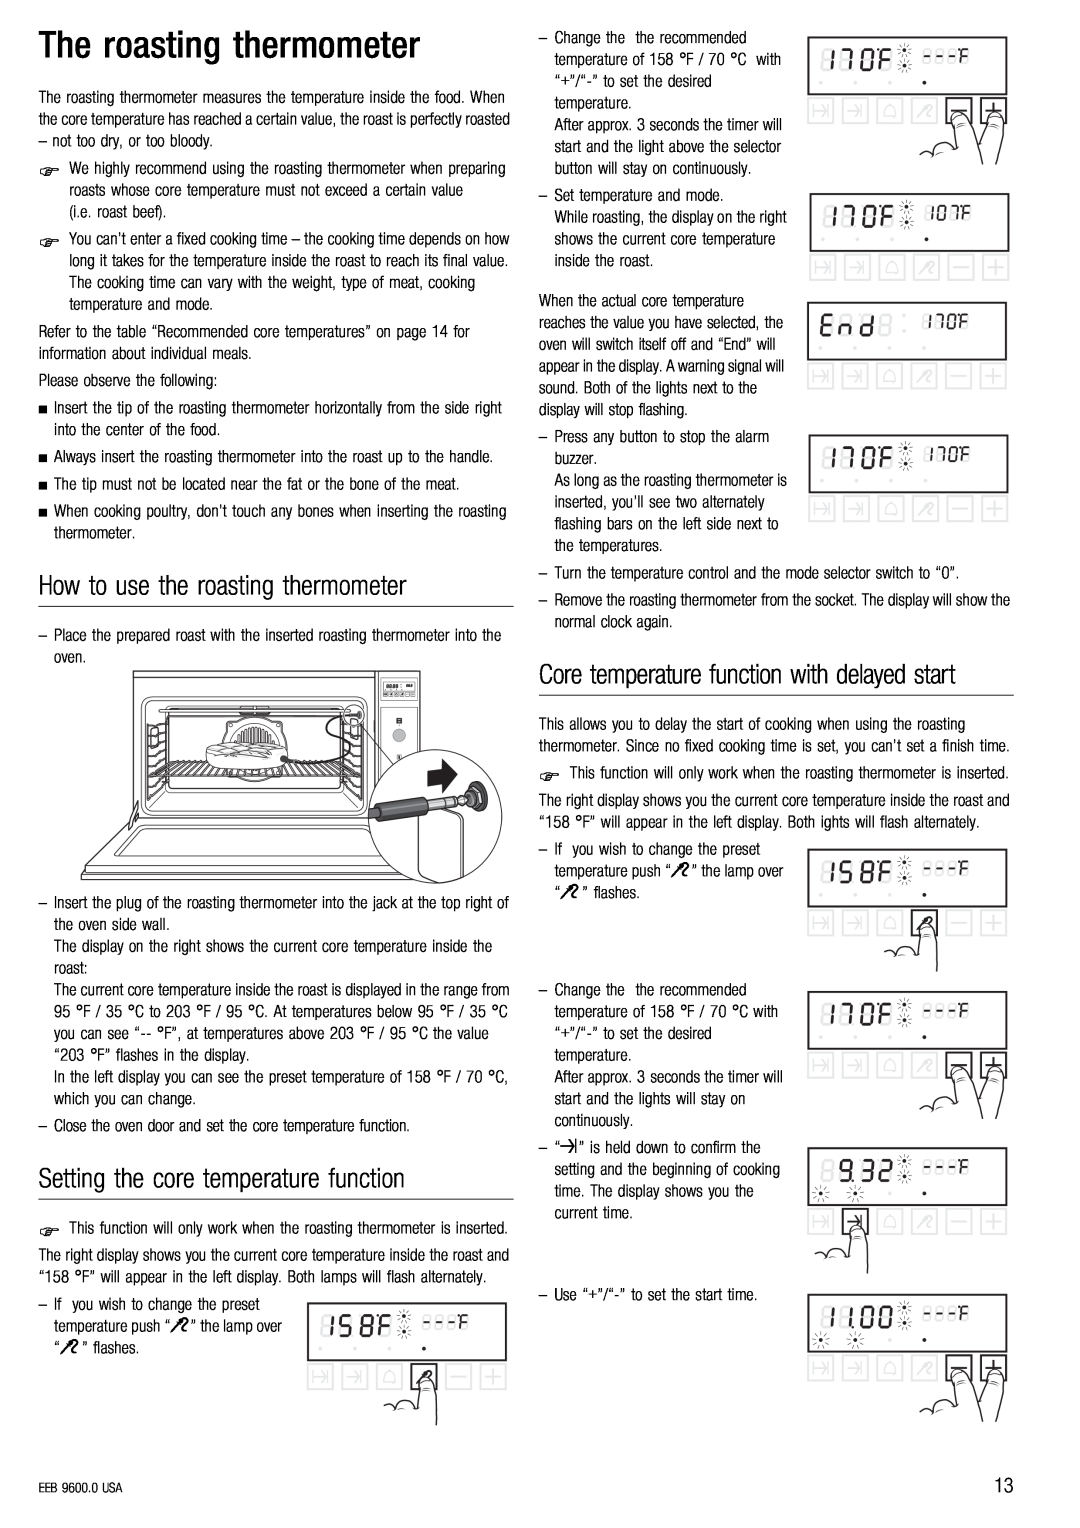 Kuppersbusch USA EEB 9600.0 manual The roasting thermometer, How to use the roasting thermometer 